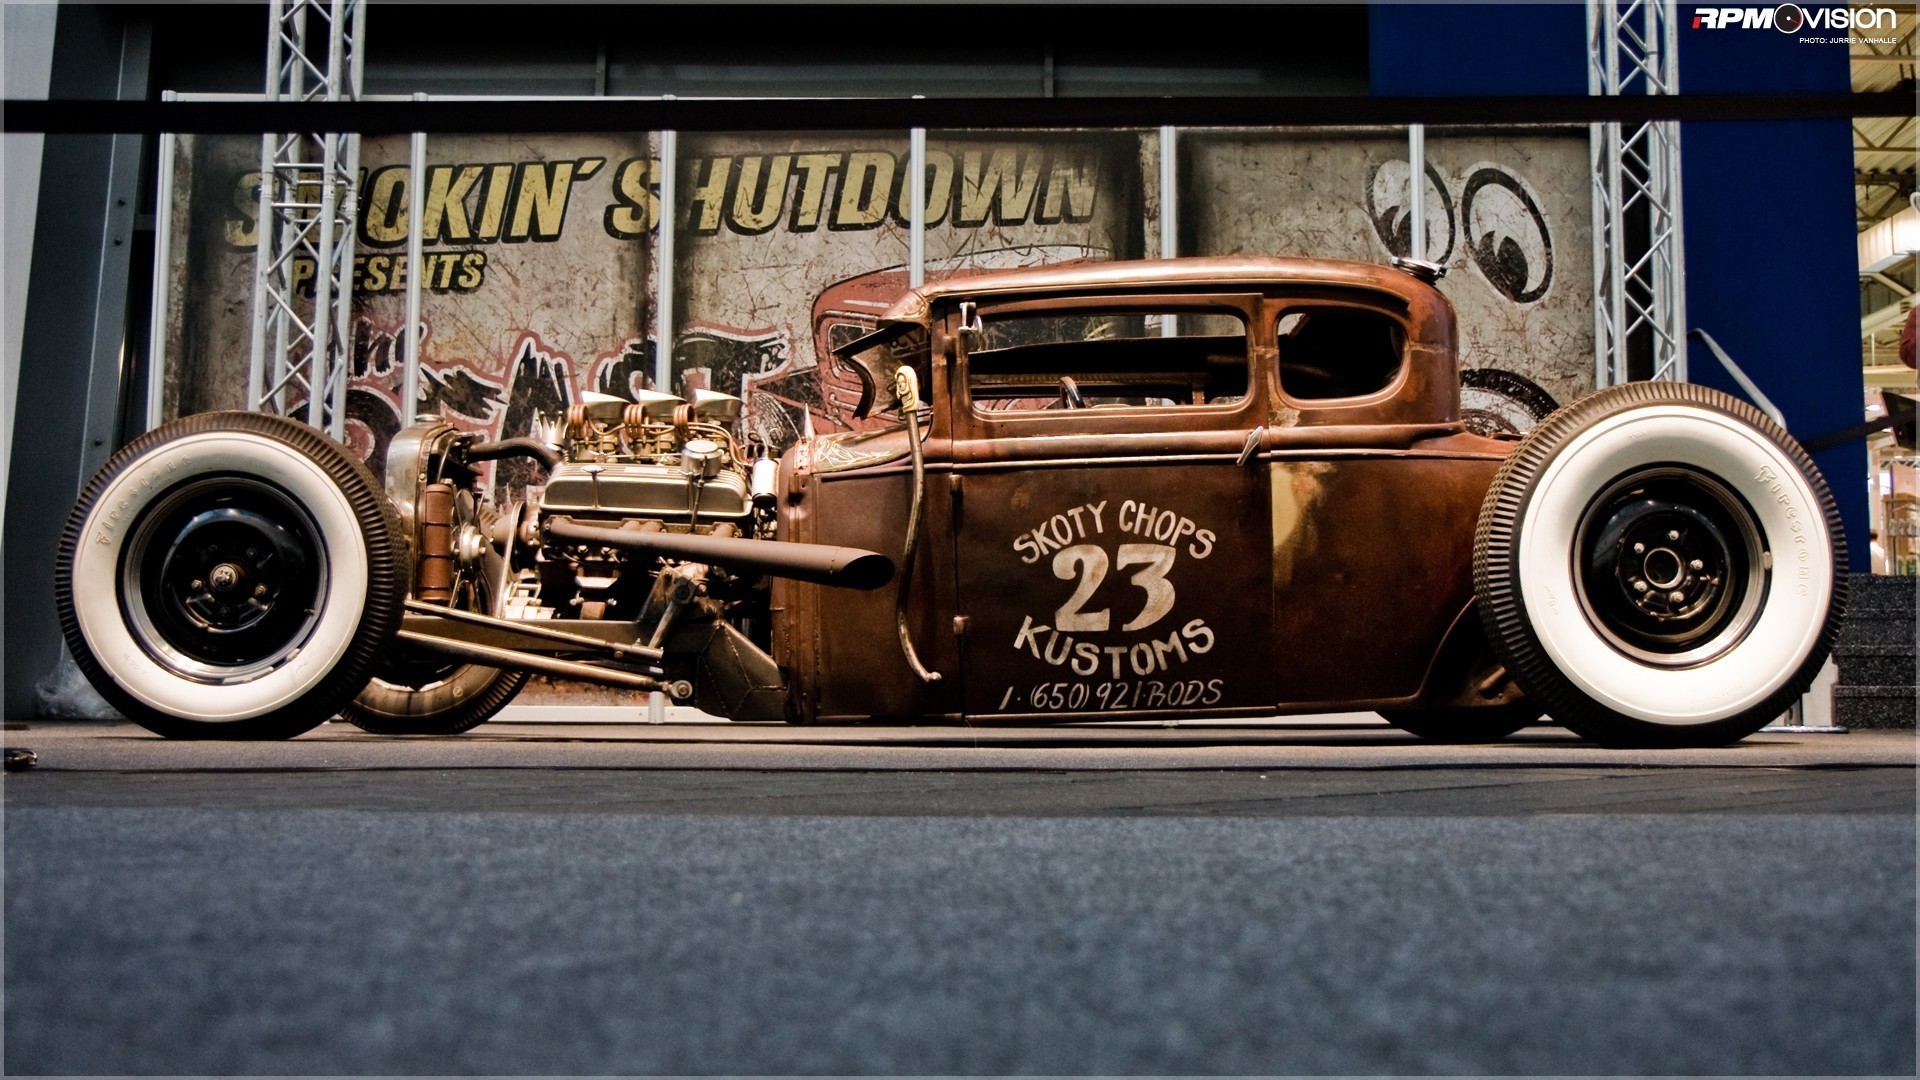 1920x1080 Cars engines hot rod rat automobile wallpaper